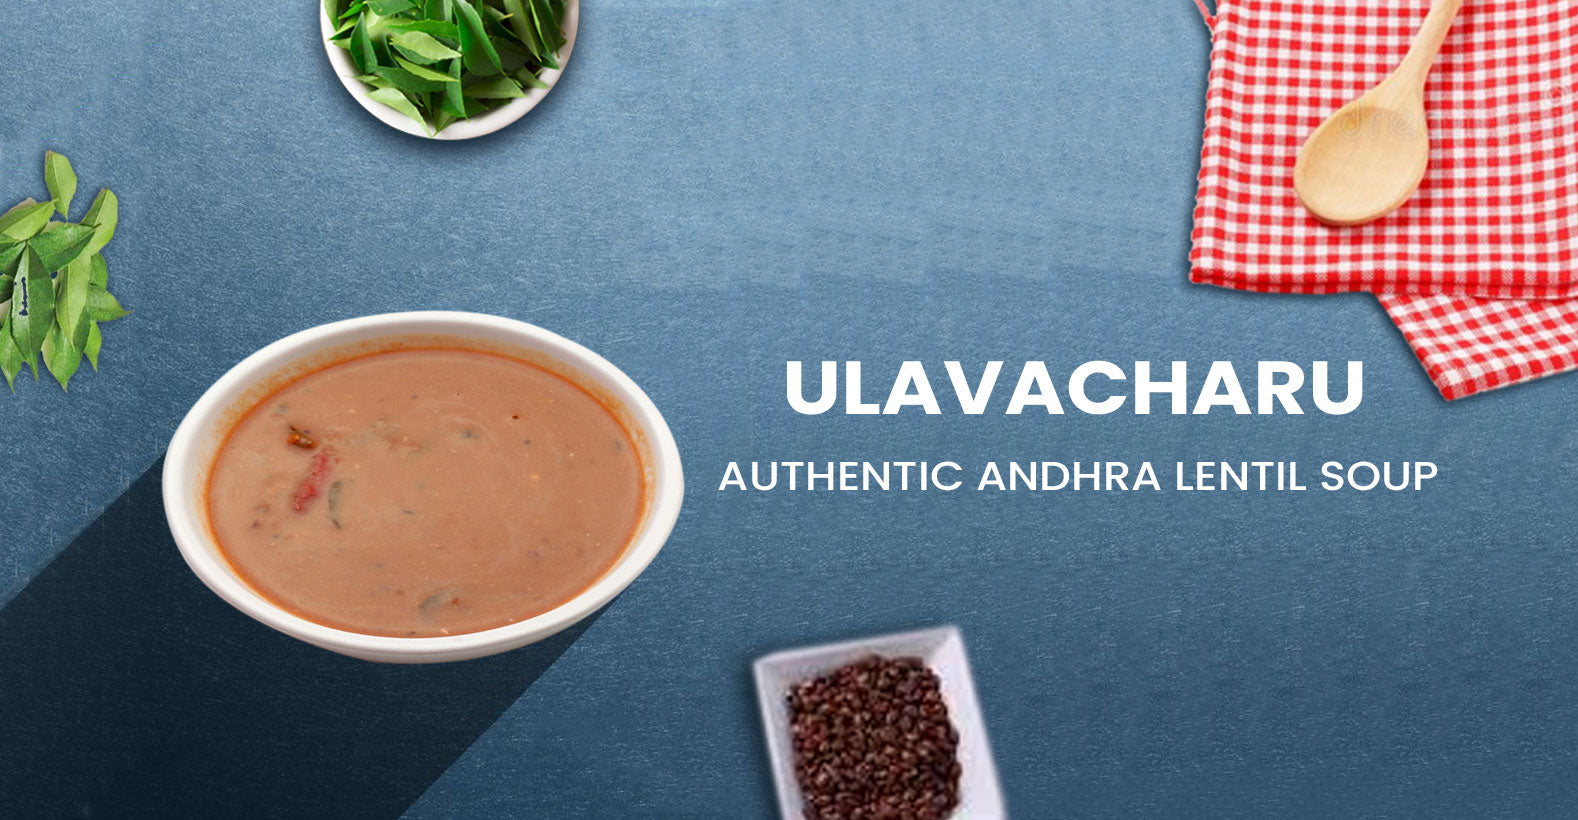 Ulavacharu- A Super Food In Its Own Way